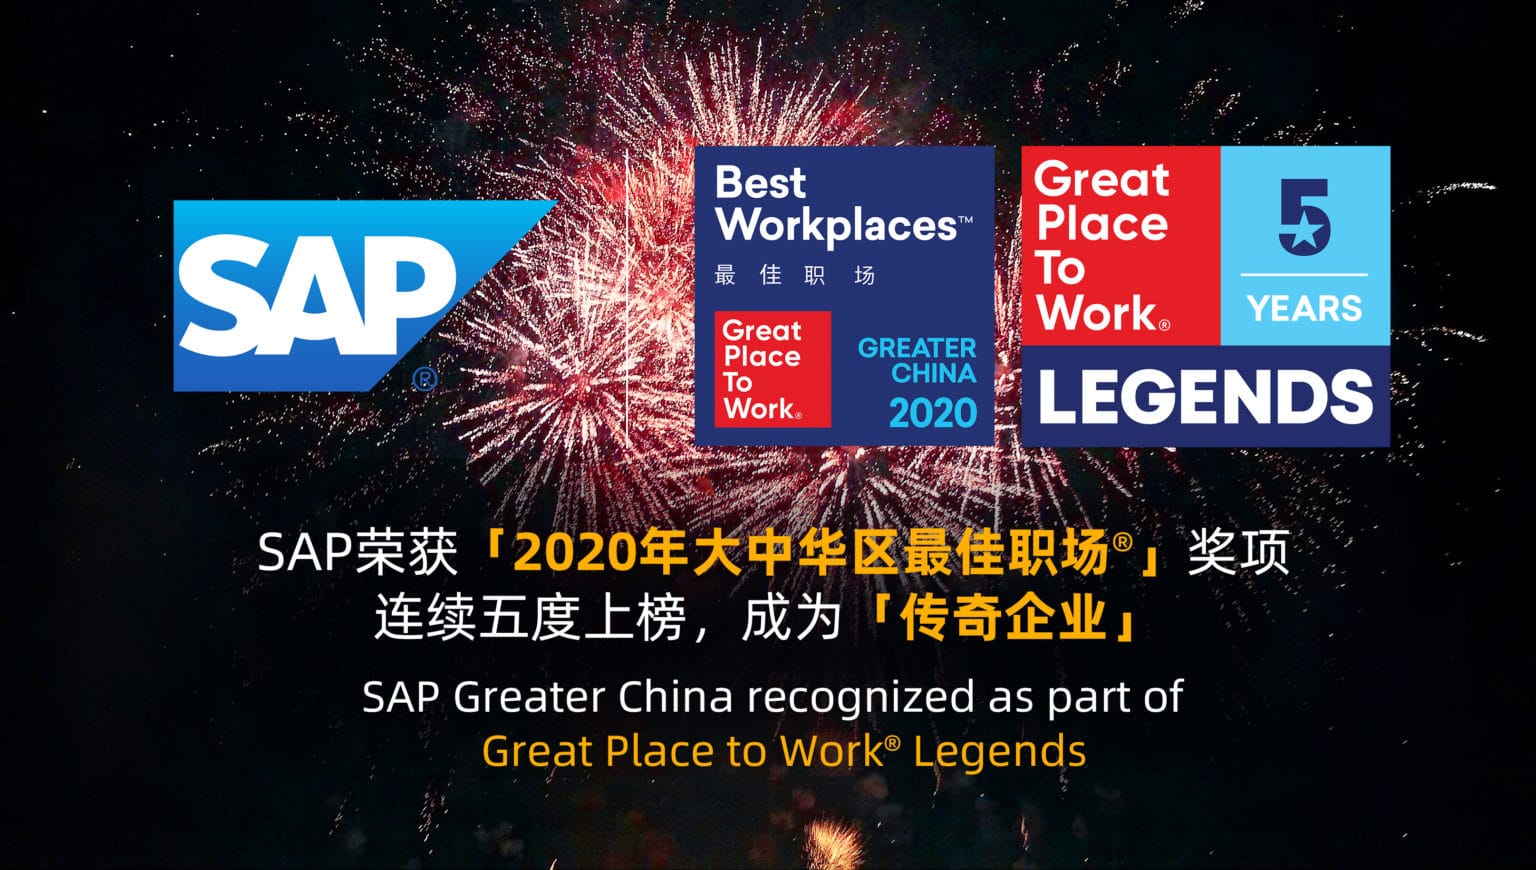 SAP荣获「2020年大中华区最佳职场®」奖项 连续五度上榜，成为「传奇企业」